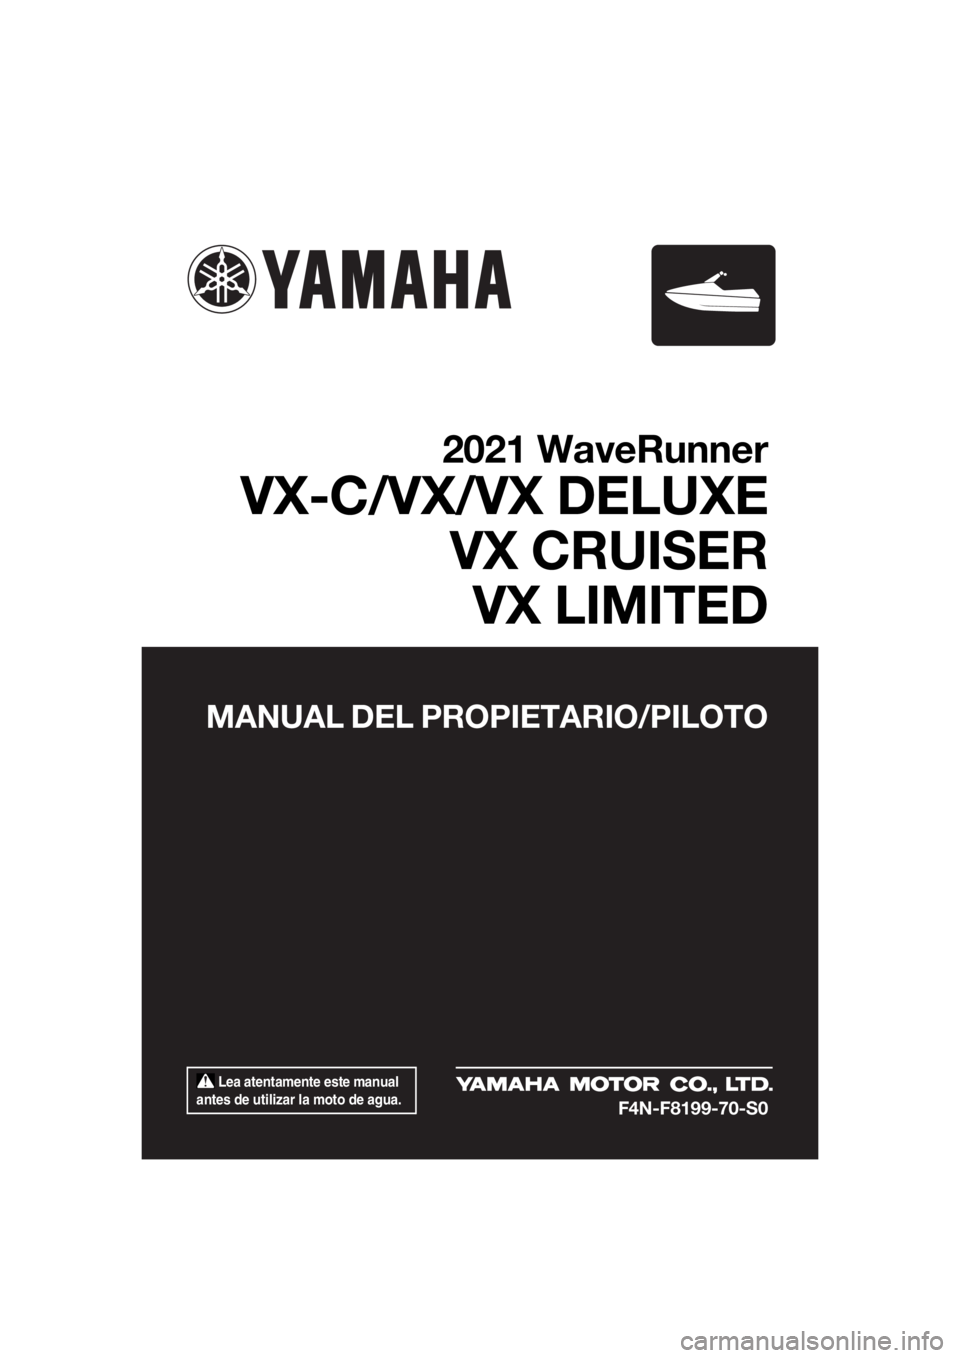 YAMAHA VX 2021  Manuale de Empleo (in Spanish)  Lea atentamente este manual 
antes de utilizar la moto de agua.
MANUAL DEL PROPIETARIO/PILOTO
2021 WaveRunner
VX-C/VX/VX DELUXE VX CRUISERVX LIMITED
F4N-F8199-70-S0
UF4N70S0.book  Page 1  Wednesday, 